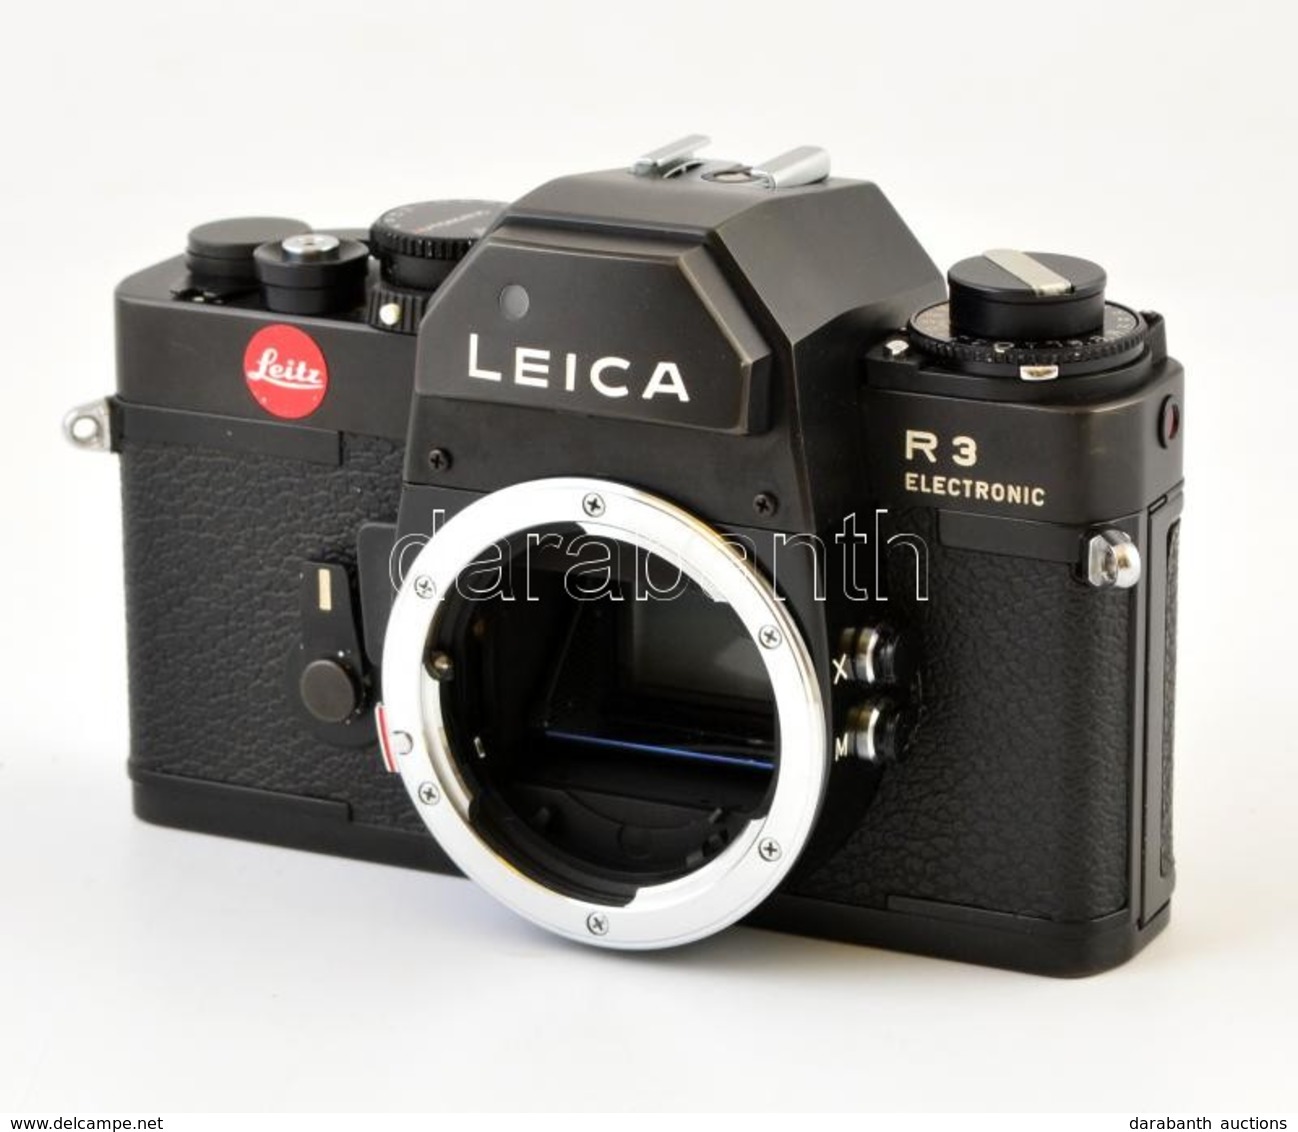 Cca 1976 Leitz Leica R3 Electronic Filmes SLR Váz, Nagyon Szép állapotban / Vintage Leica R3 SLR Camera Body, In Very Go - Fotoapparate